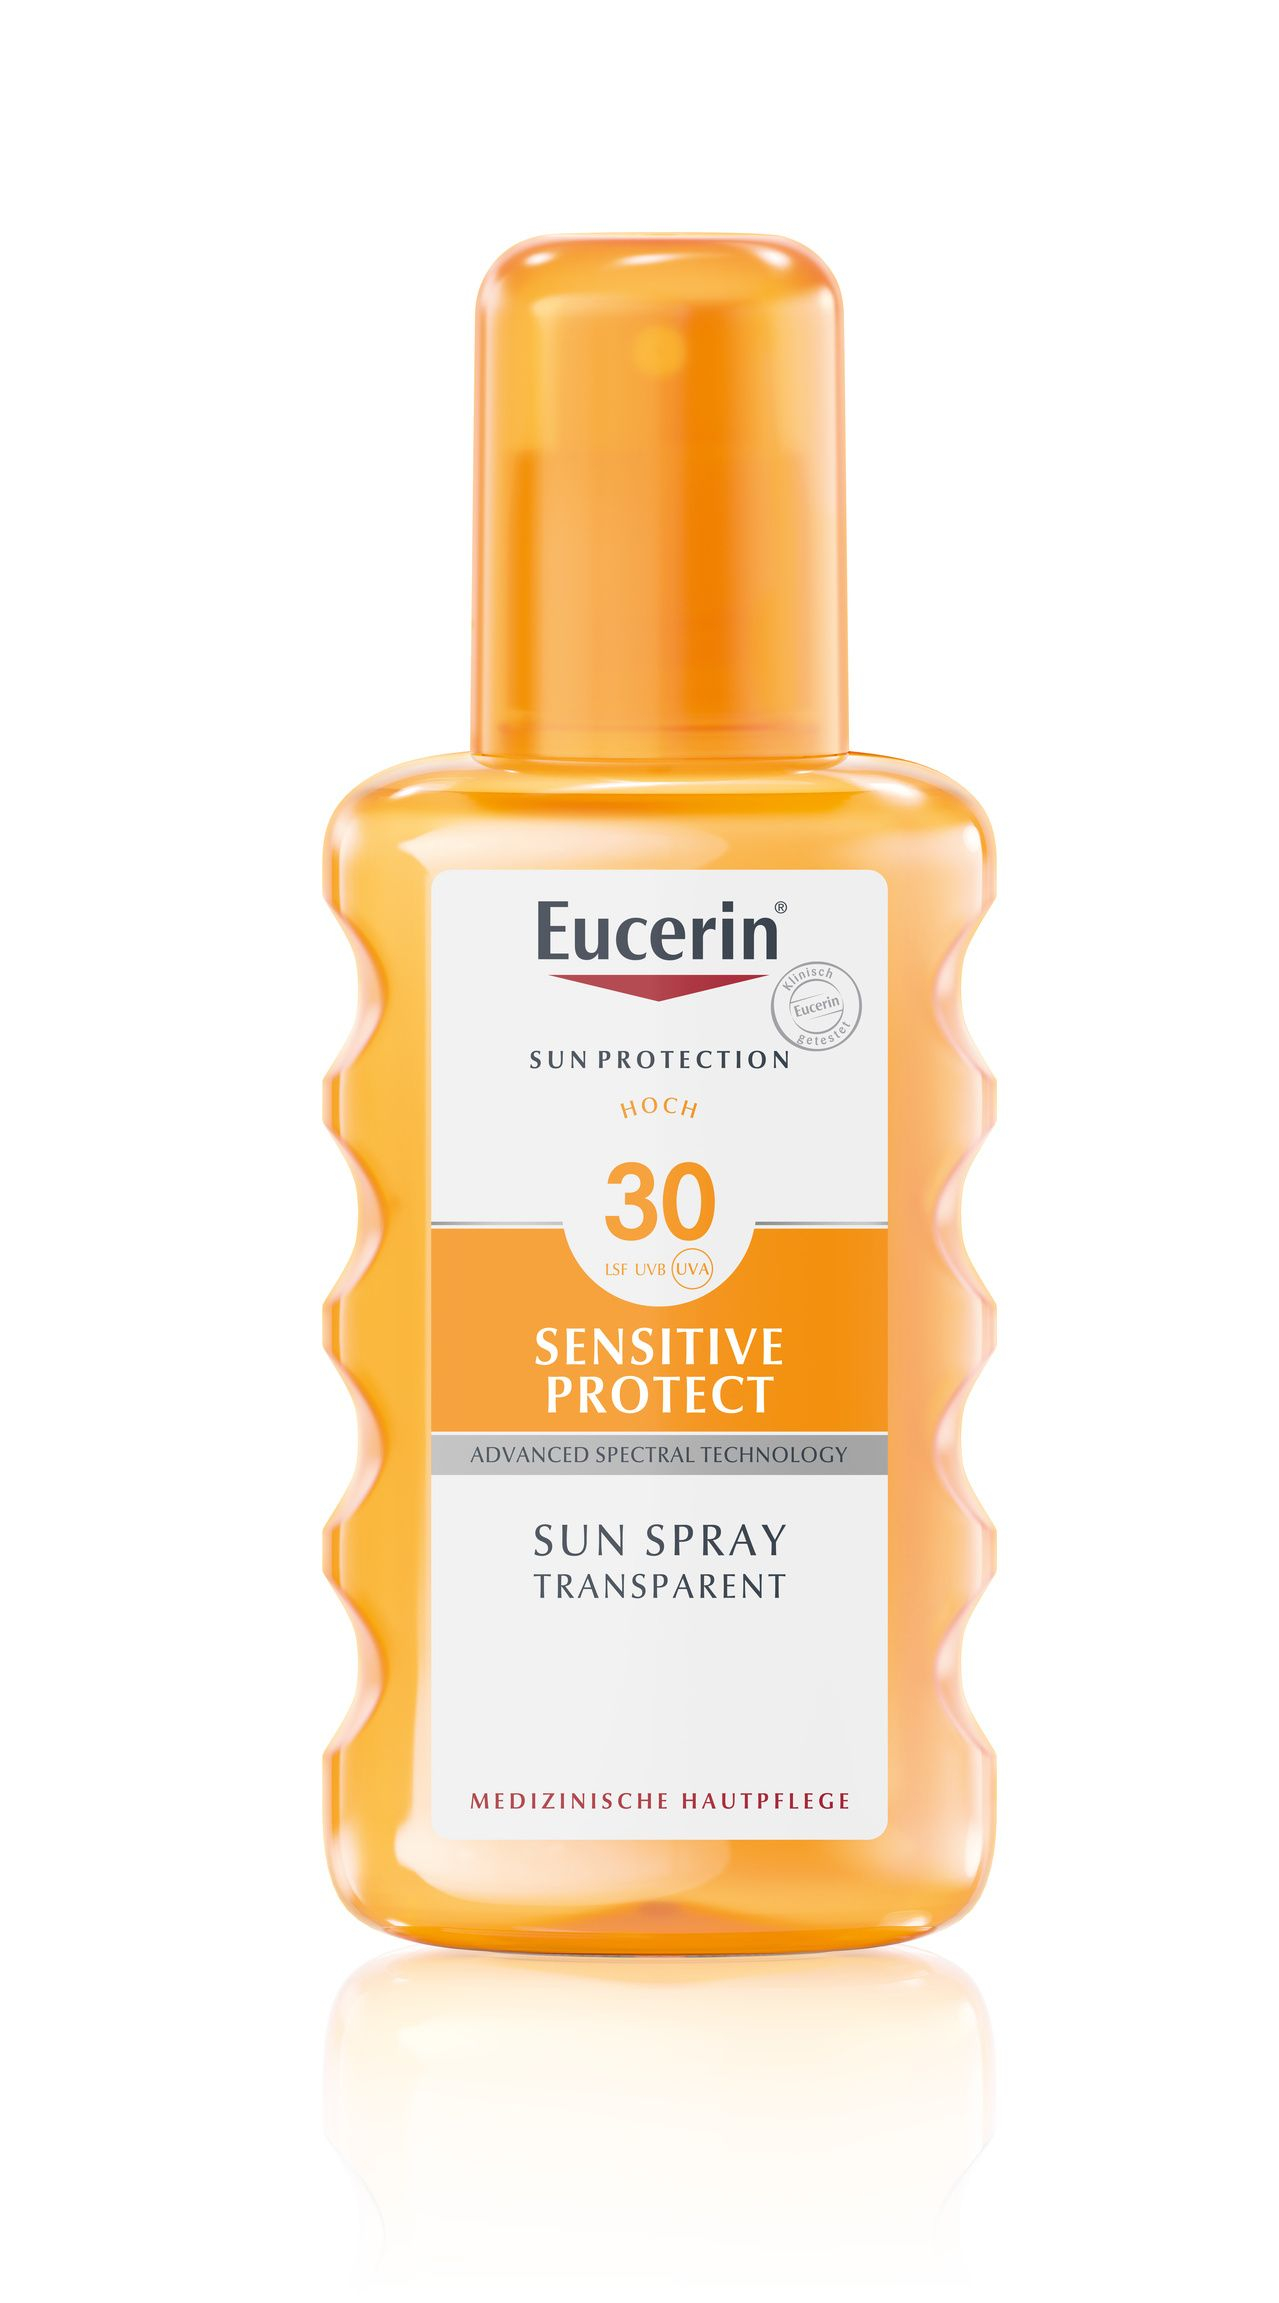 Eucerin Sensitive Protect SPF30 transparentní sprej 200 ml Eucerin